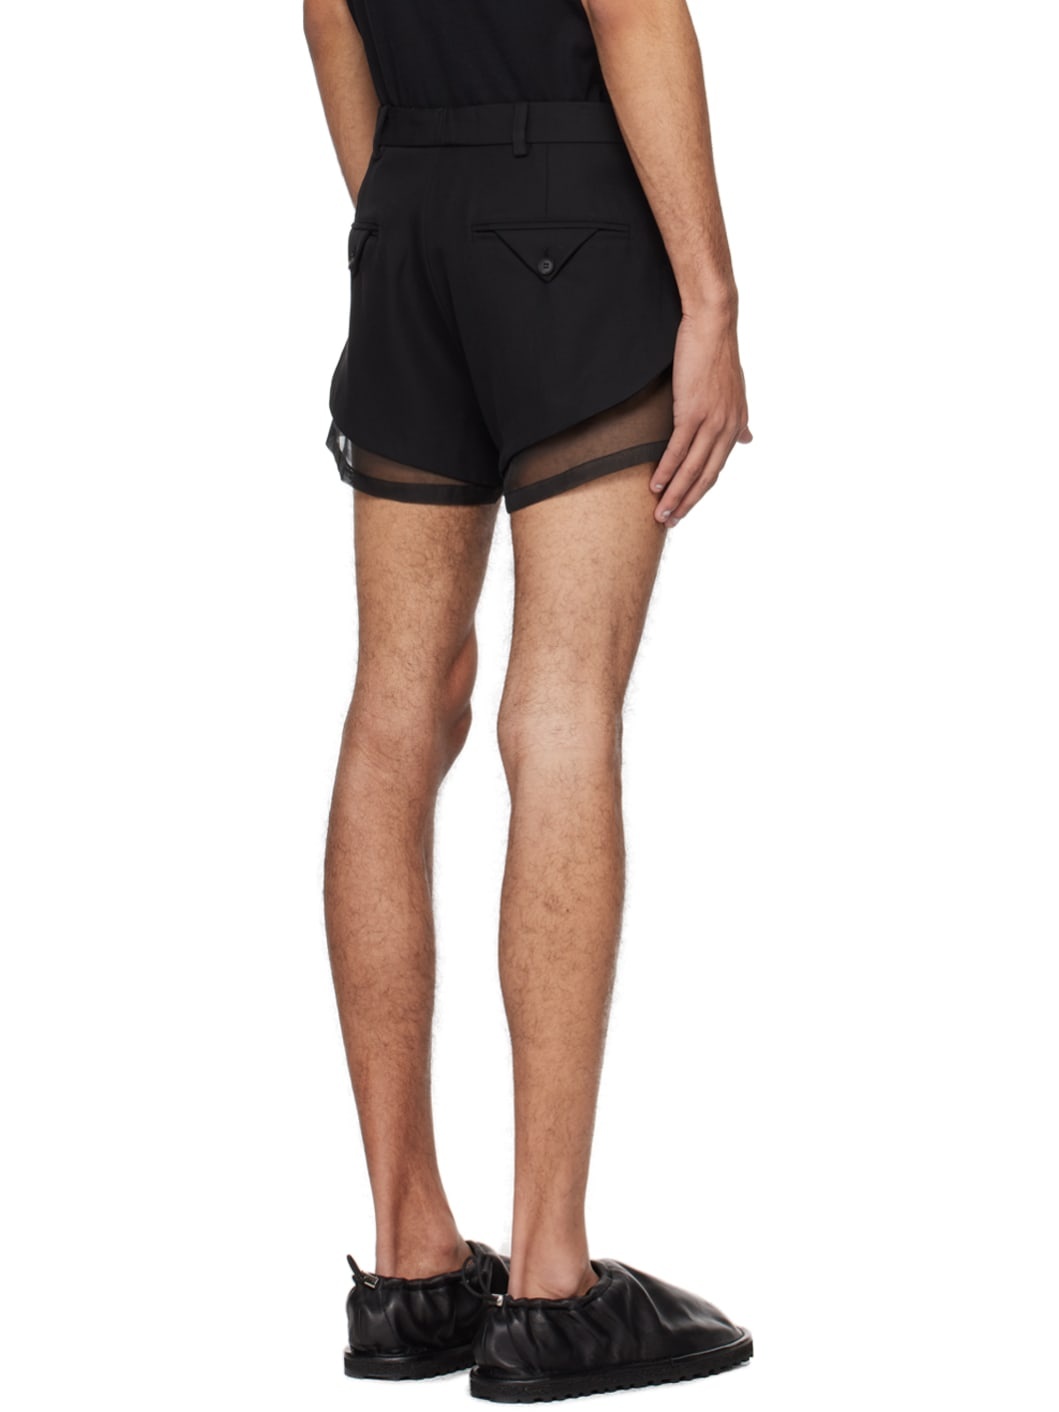 Black Exposed Lining Shorts - 3